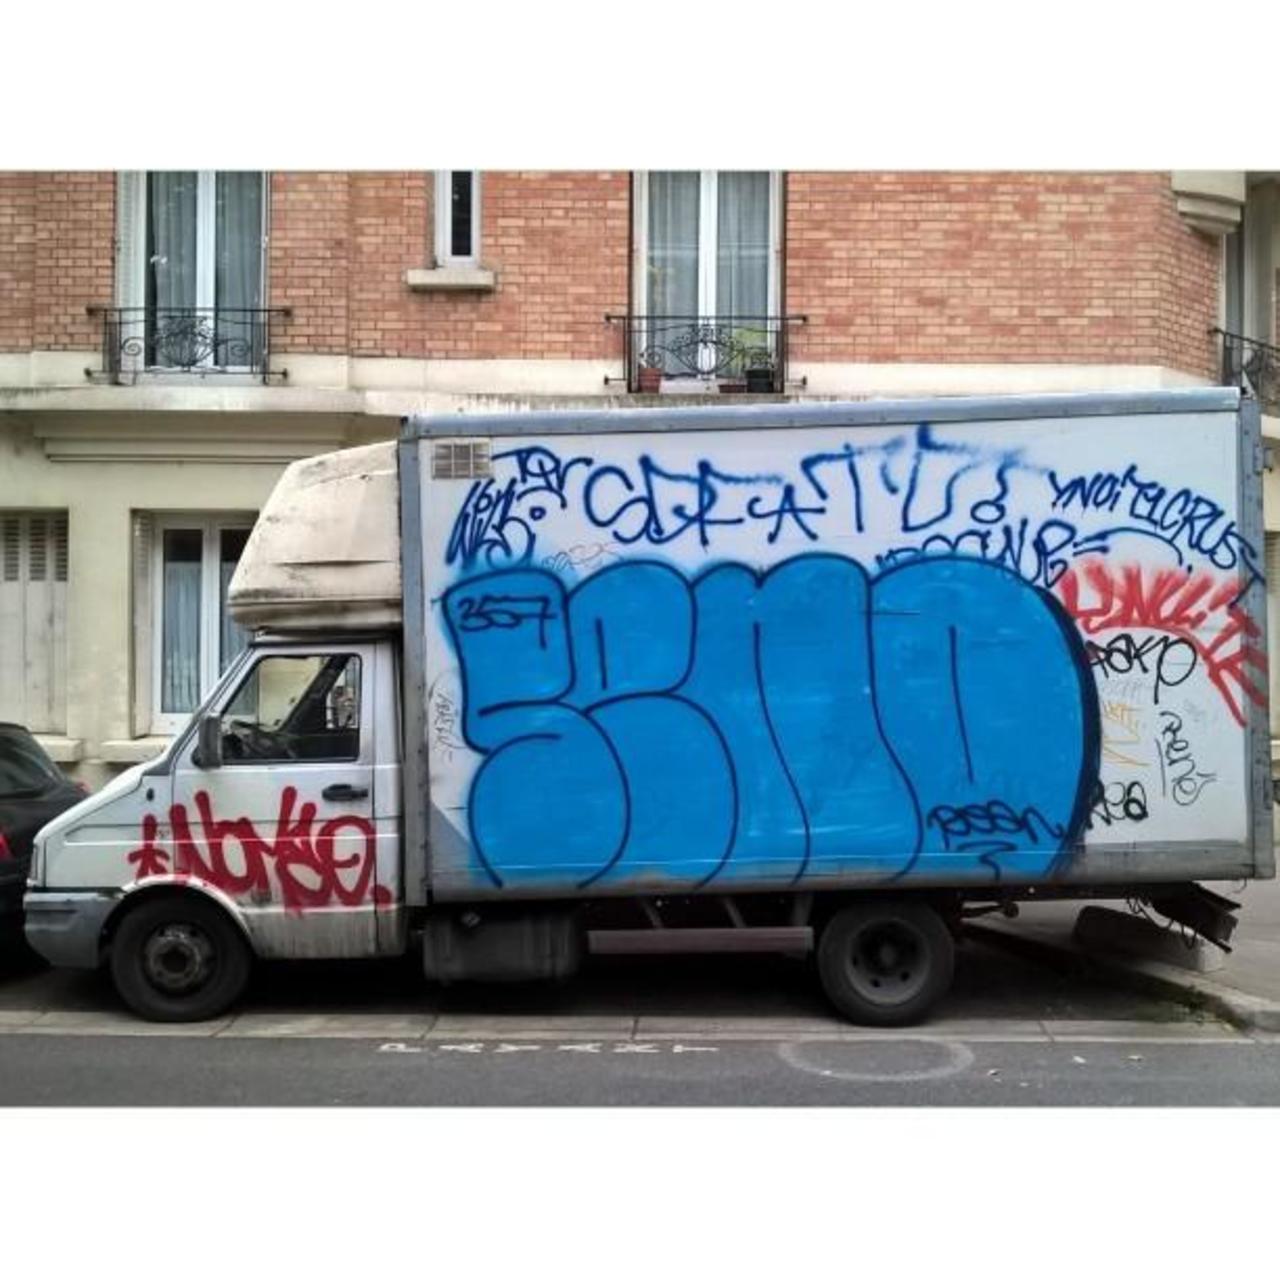 SENO
#357 #camtar #camionsparisiens #trucks_of_art #graffititruck #truckart #streetart #graffiti #graff #art #fatca… http://t.co/x4Fvakp1RS